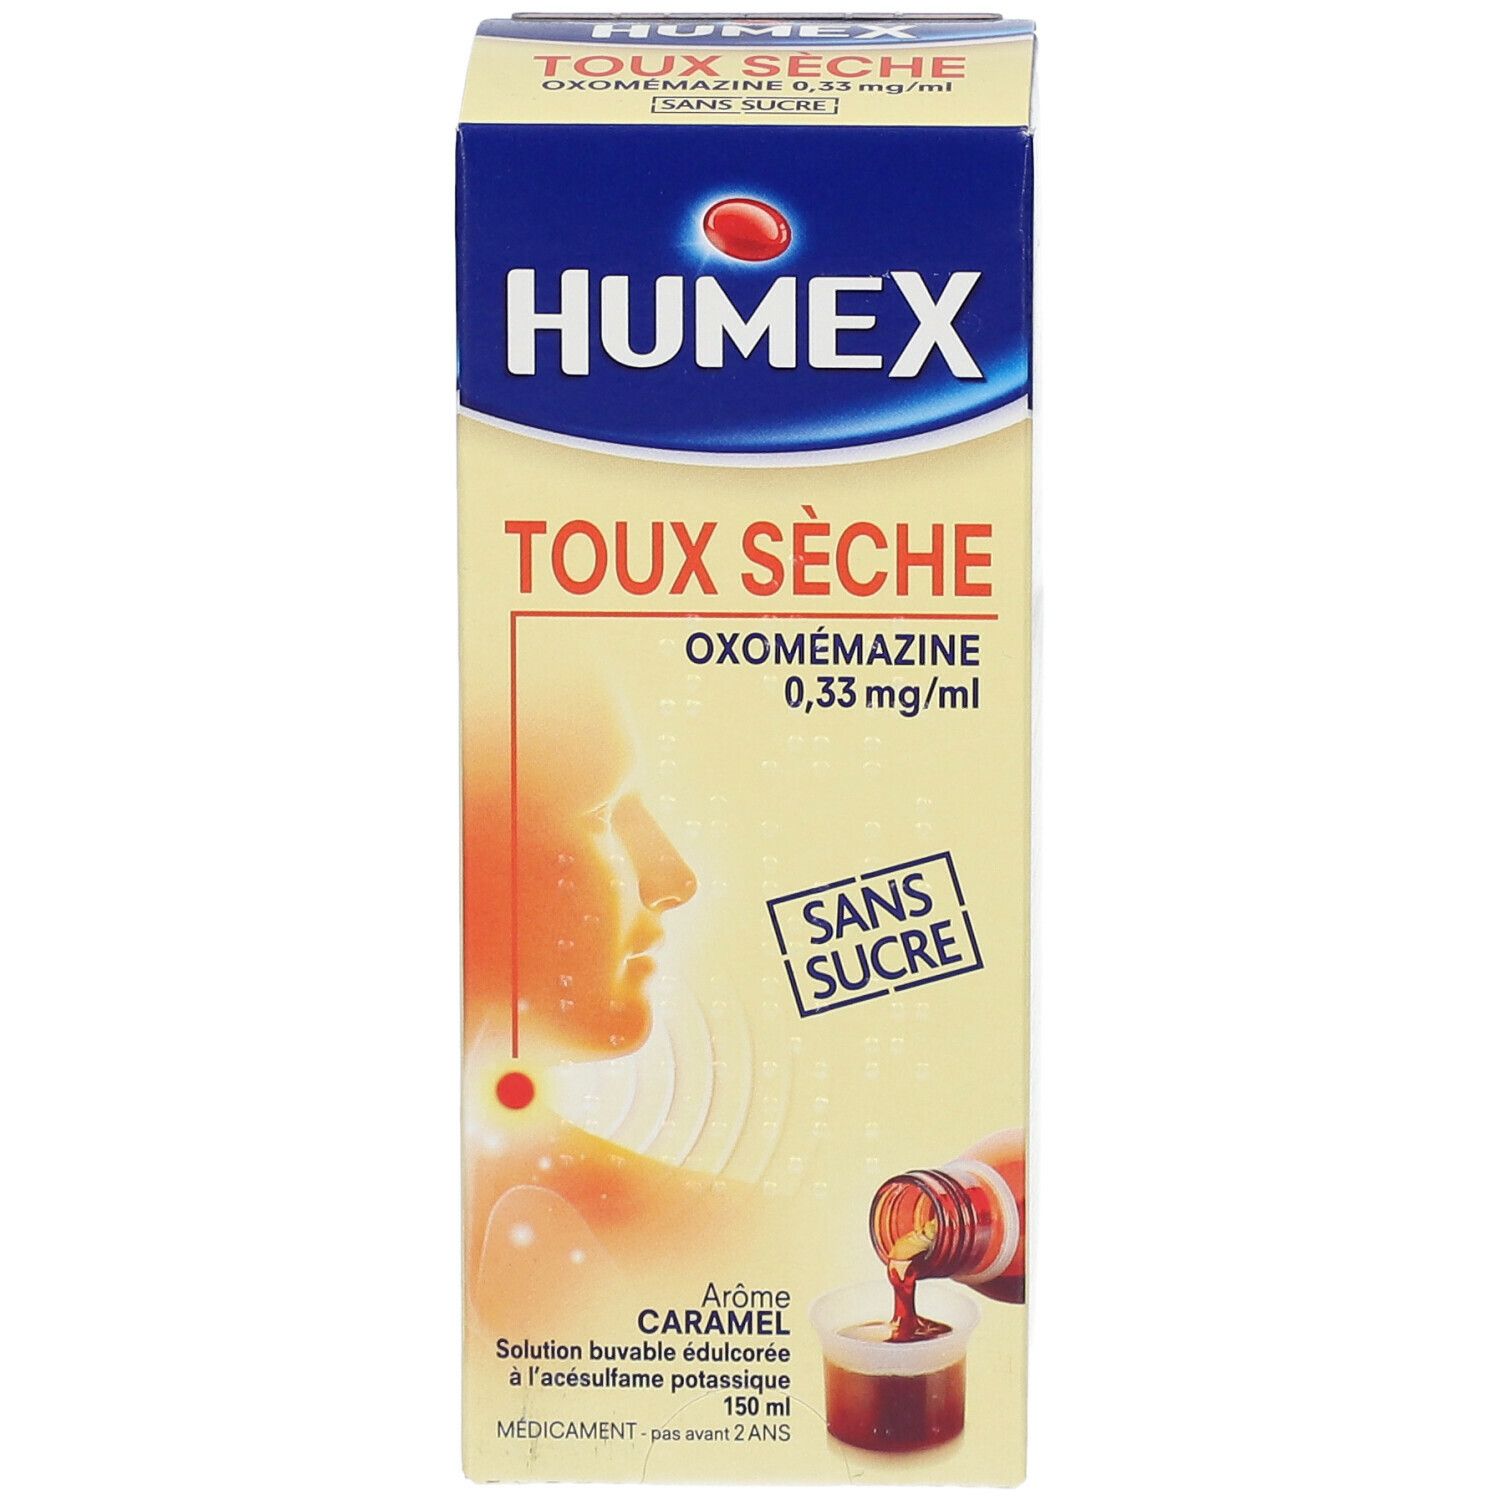 Humex Toux Sèche s/s